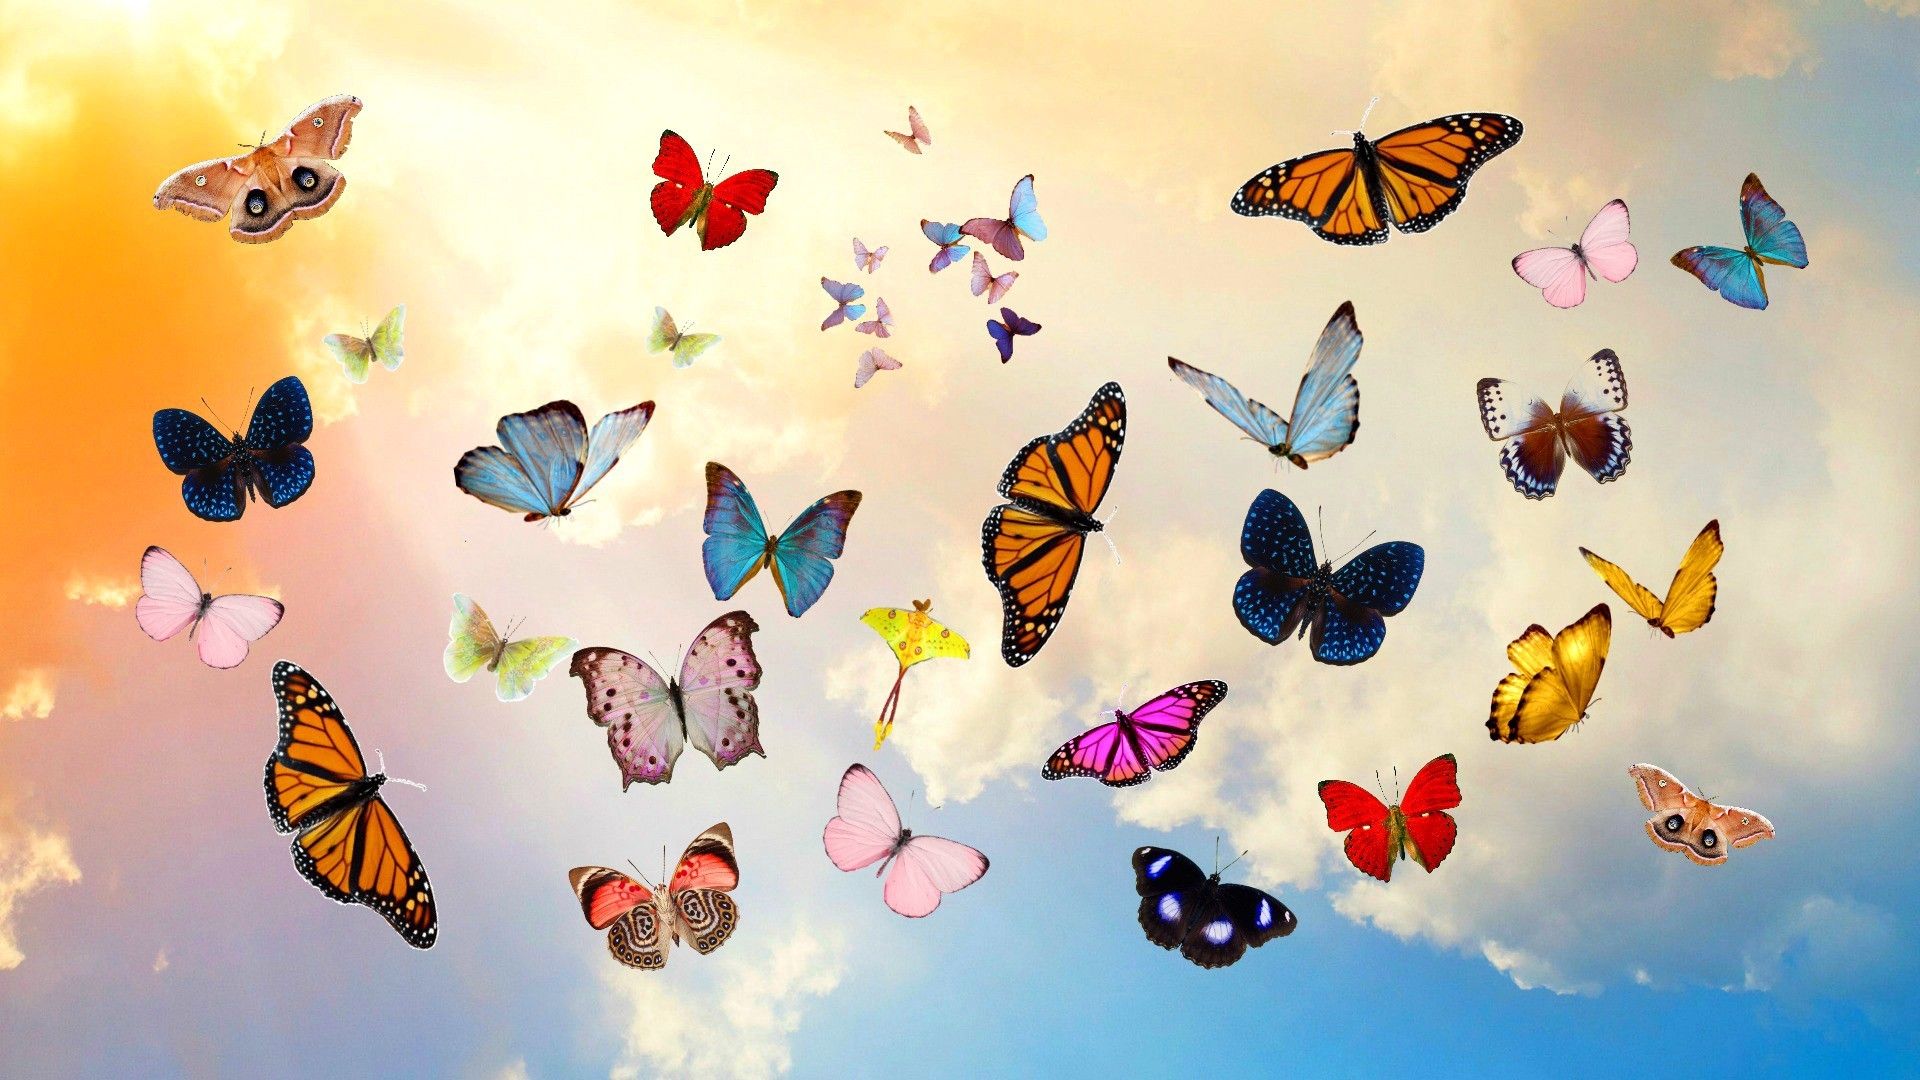 Aesthetic Butterfly Wallpaper For Computer Desktop